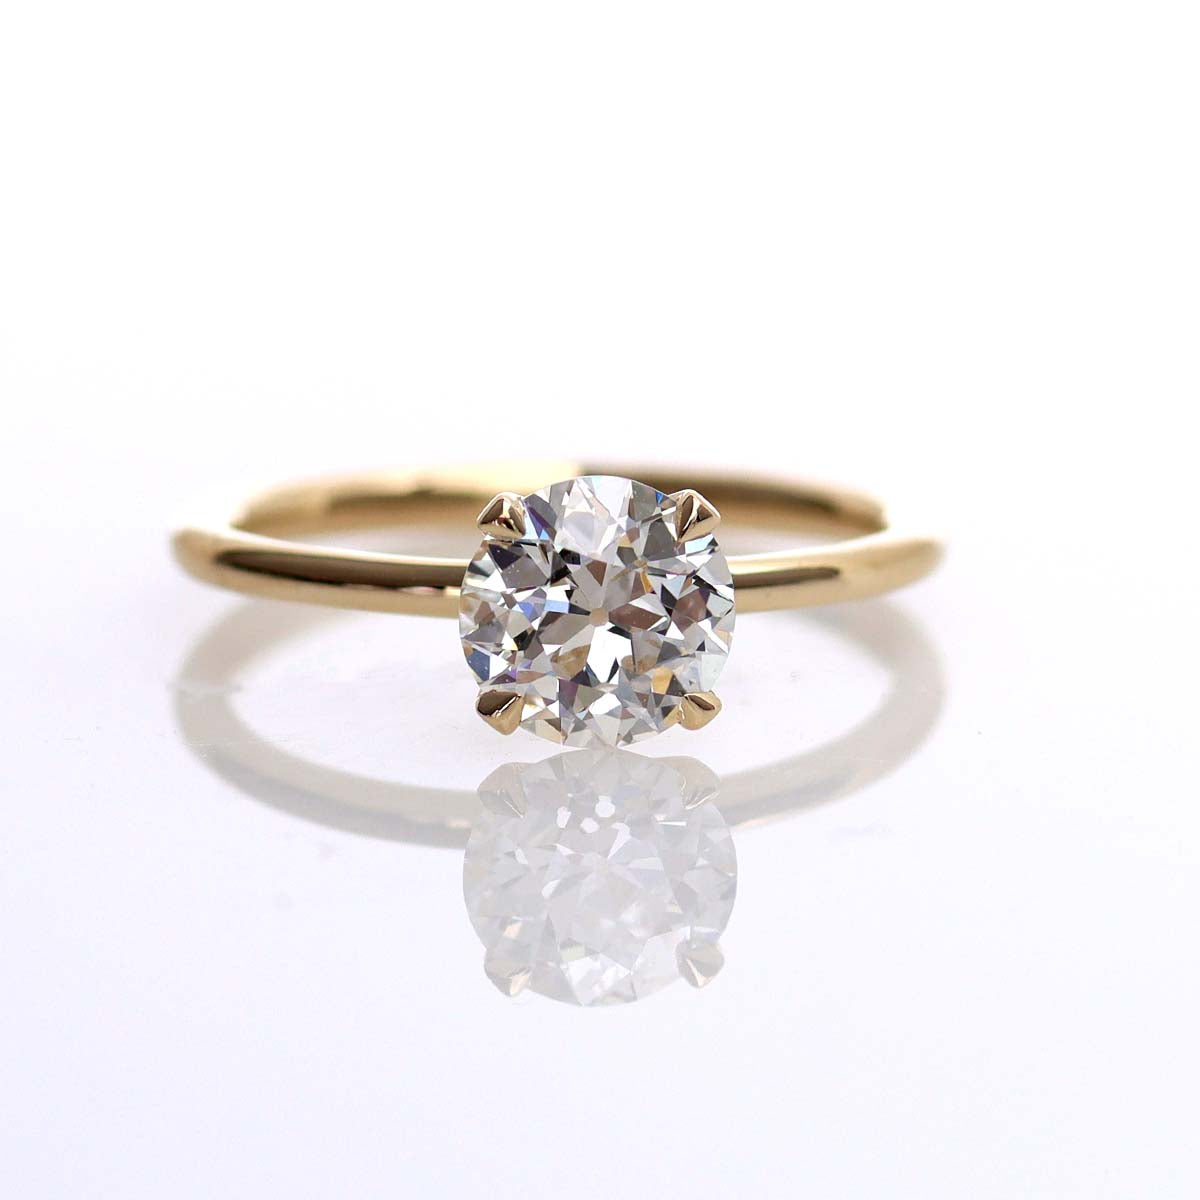 Elegant Four Prong Yellow Gold Old European Cut Diamond Engagement Ring #3605-1